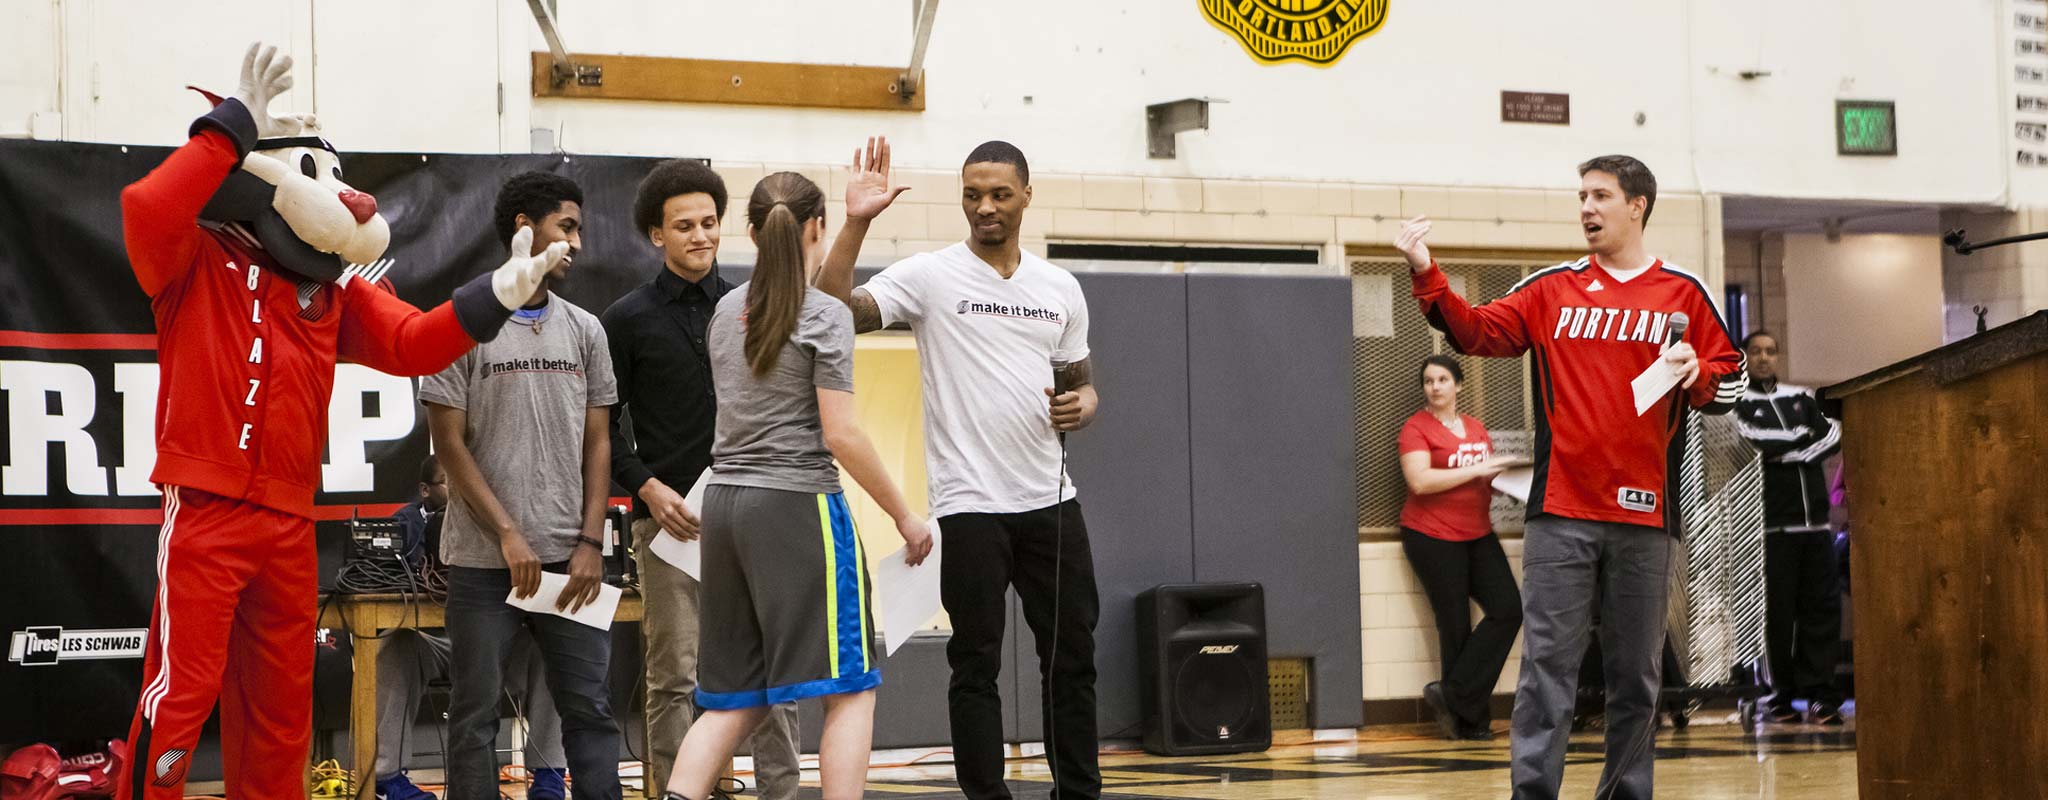 Damien Lillard high fives a student at Wilson High School as a Trailblazer mascot looks on.